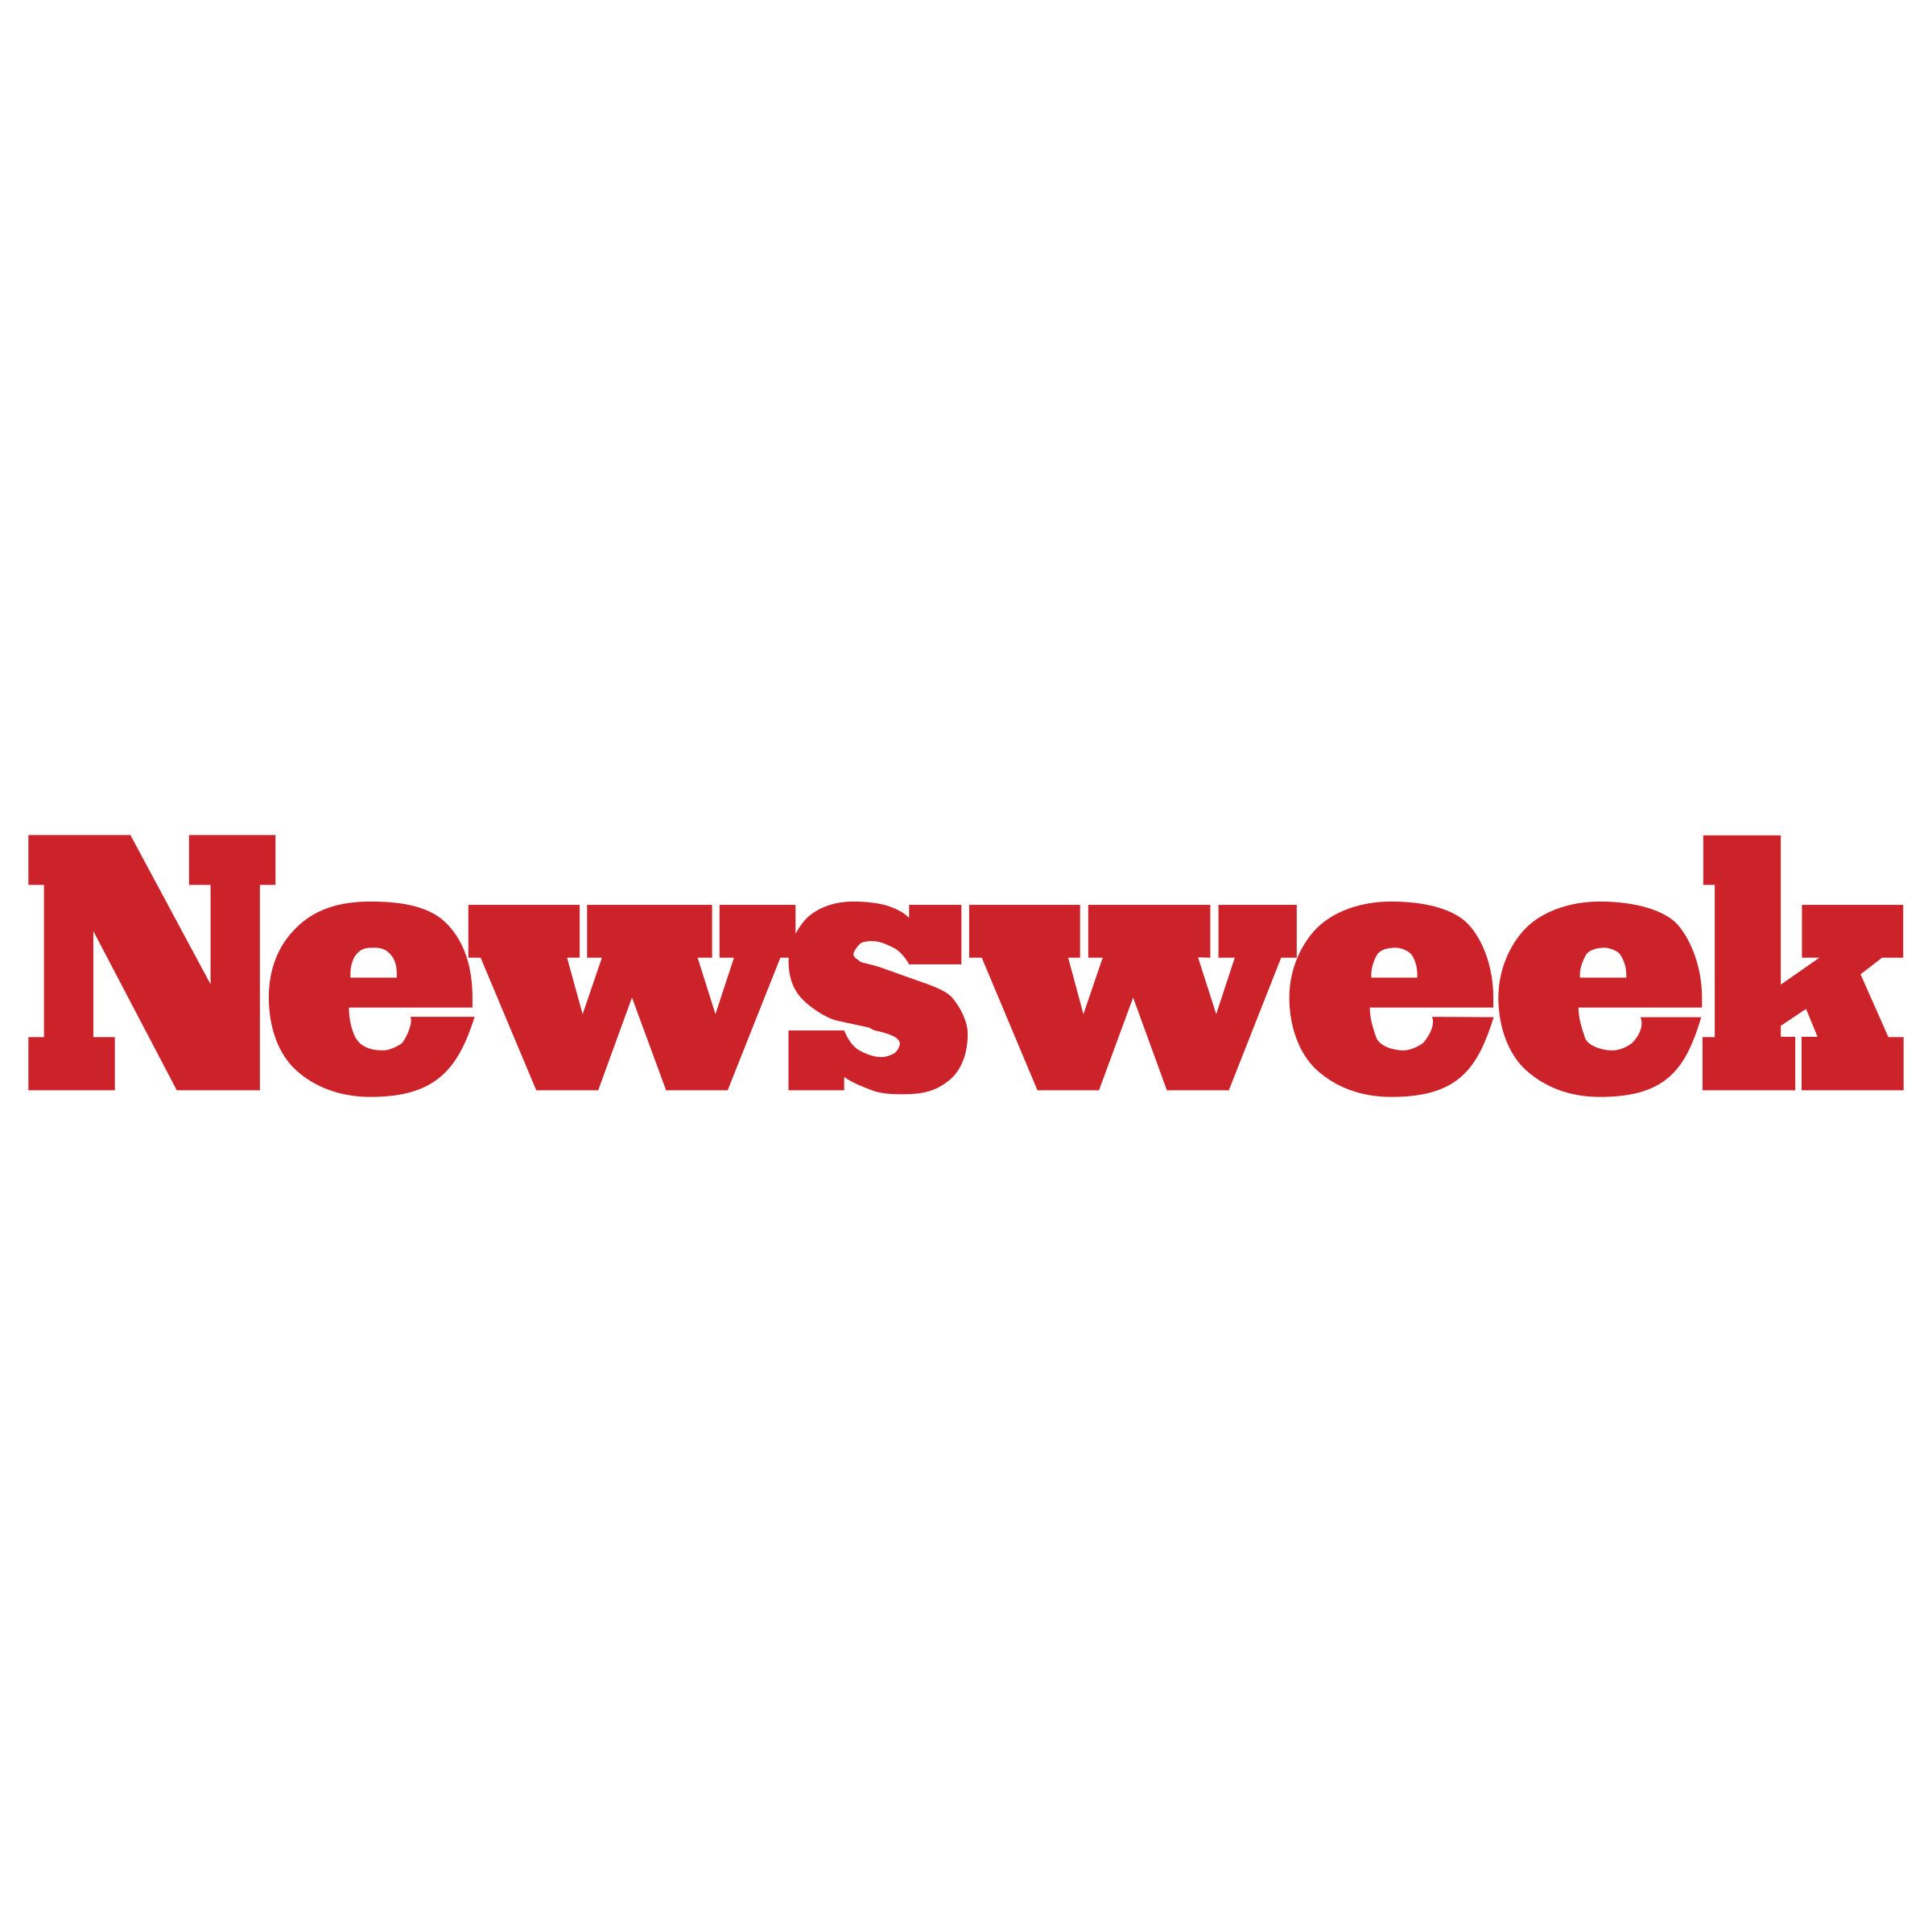 newsweek-logo-png-transparent.png